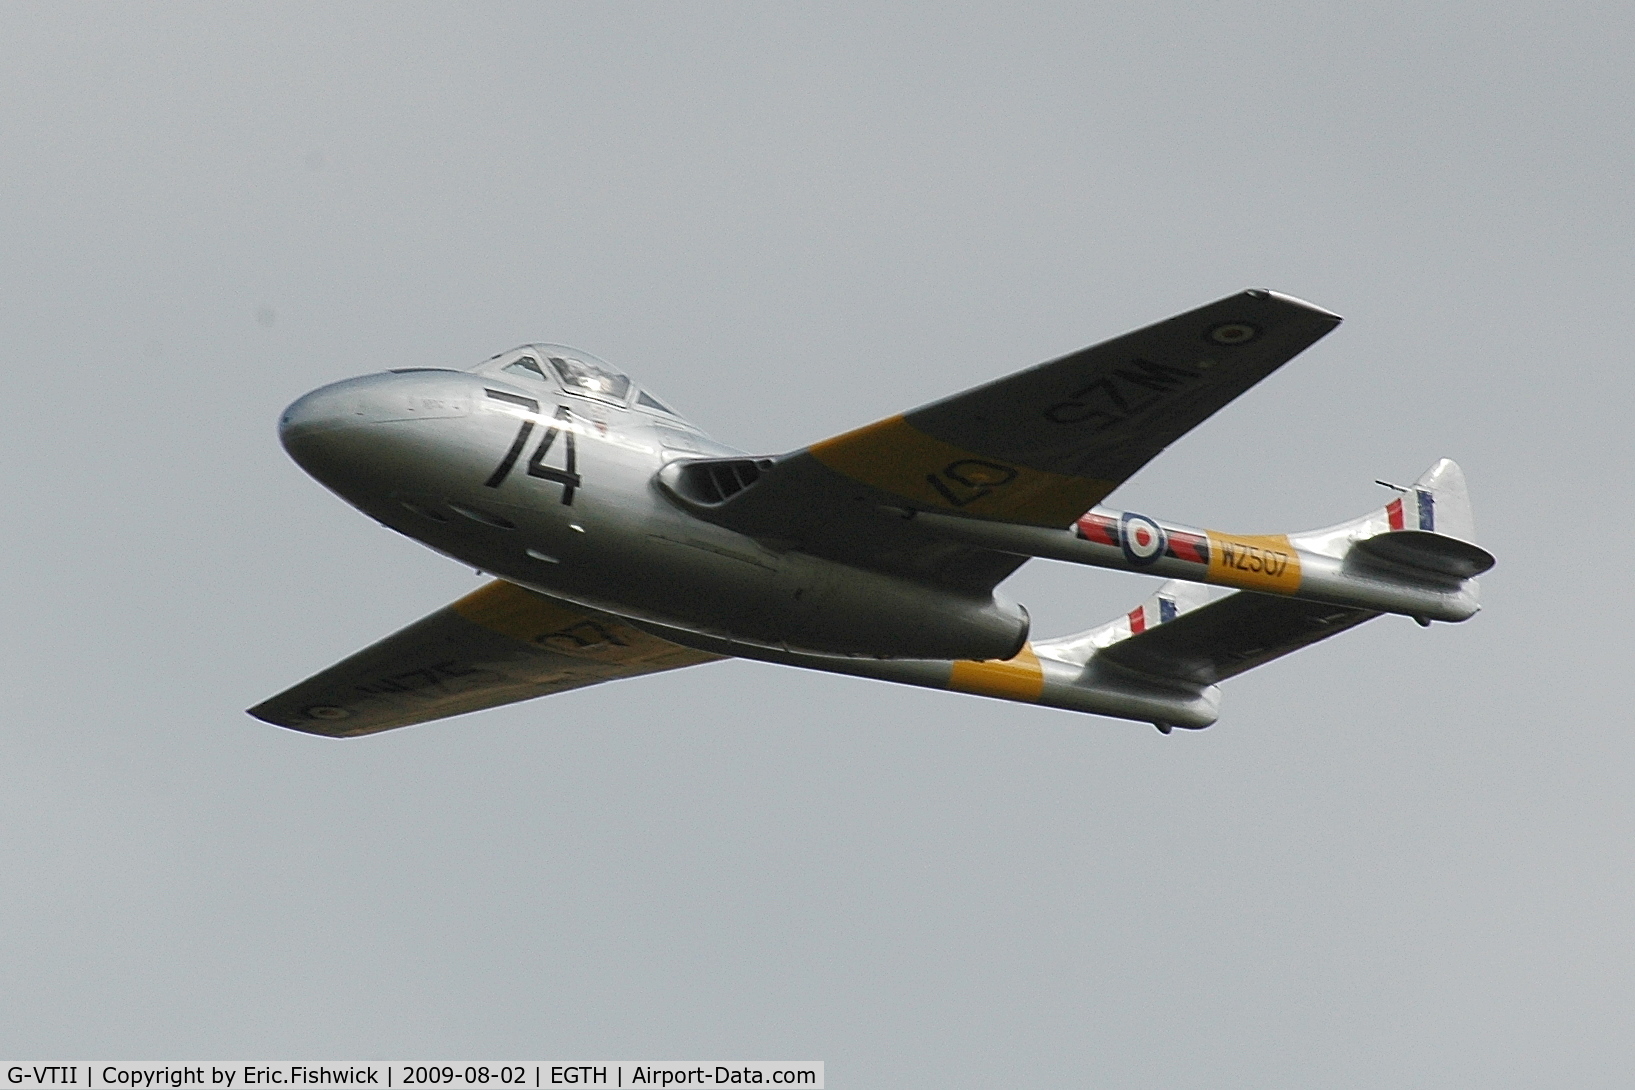 G-VTII, 1954 De Havilland DH-115 Vampire T.11 C/N 15127, WZ507 at Shuttleworth Military Pagent Air Display  Aug 09